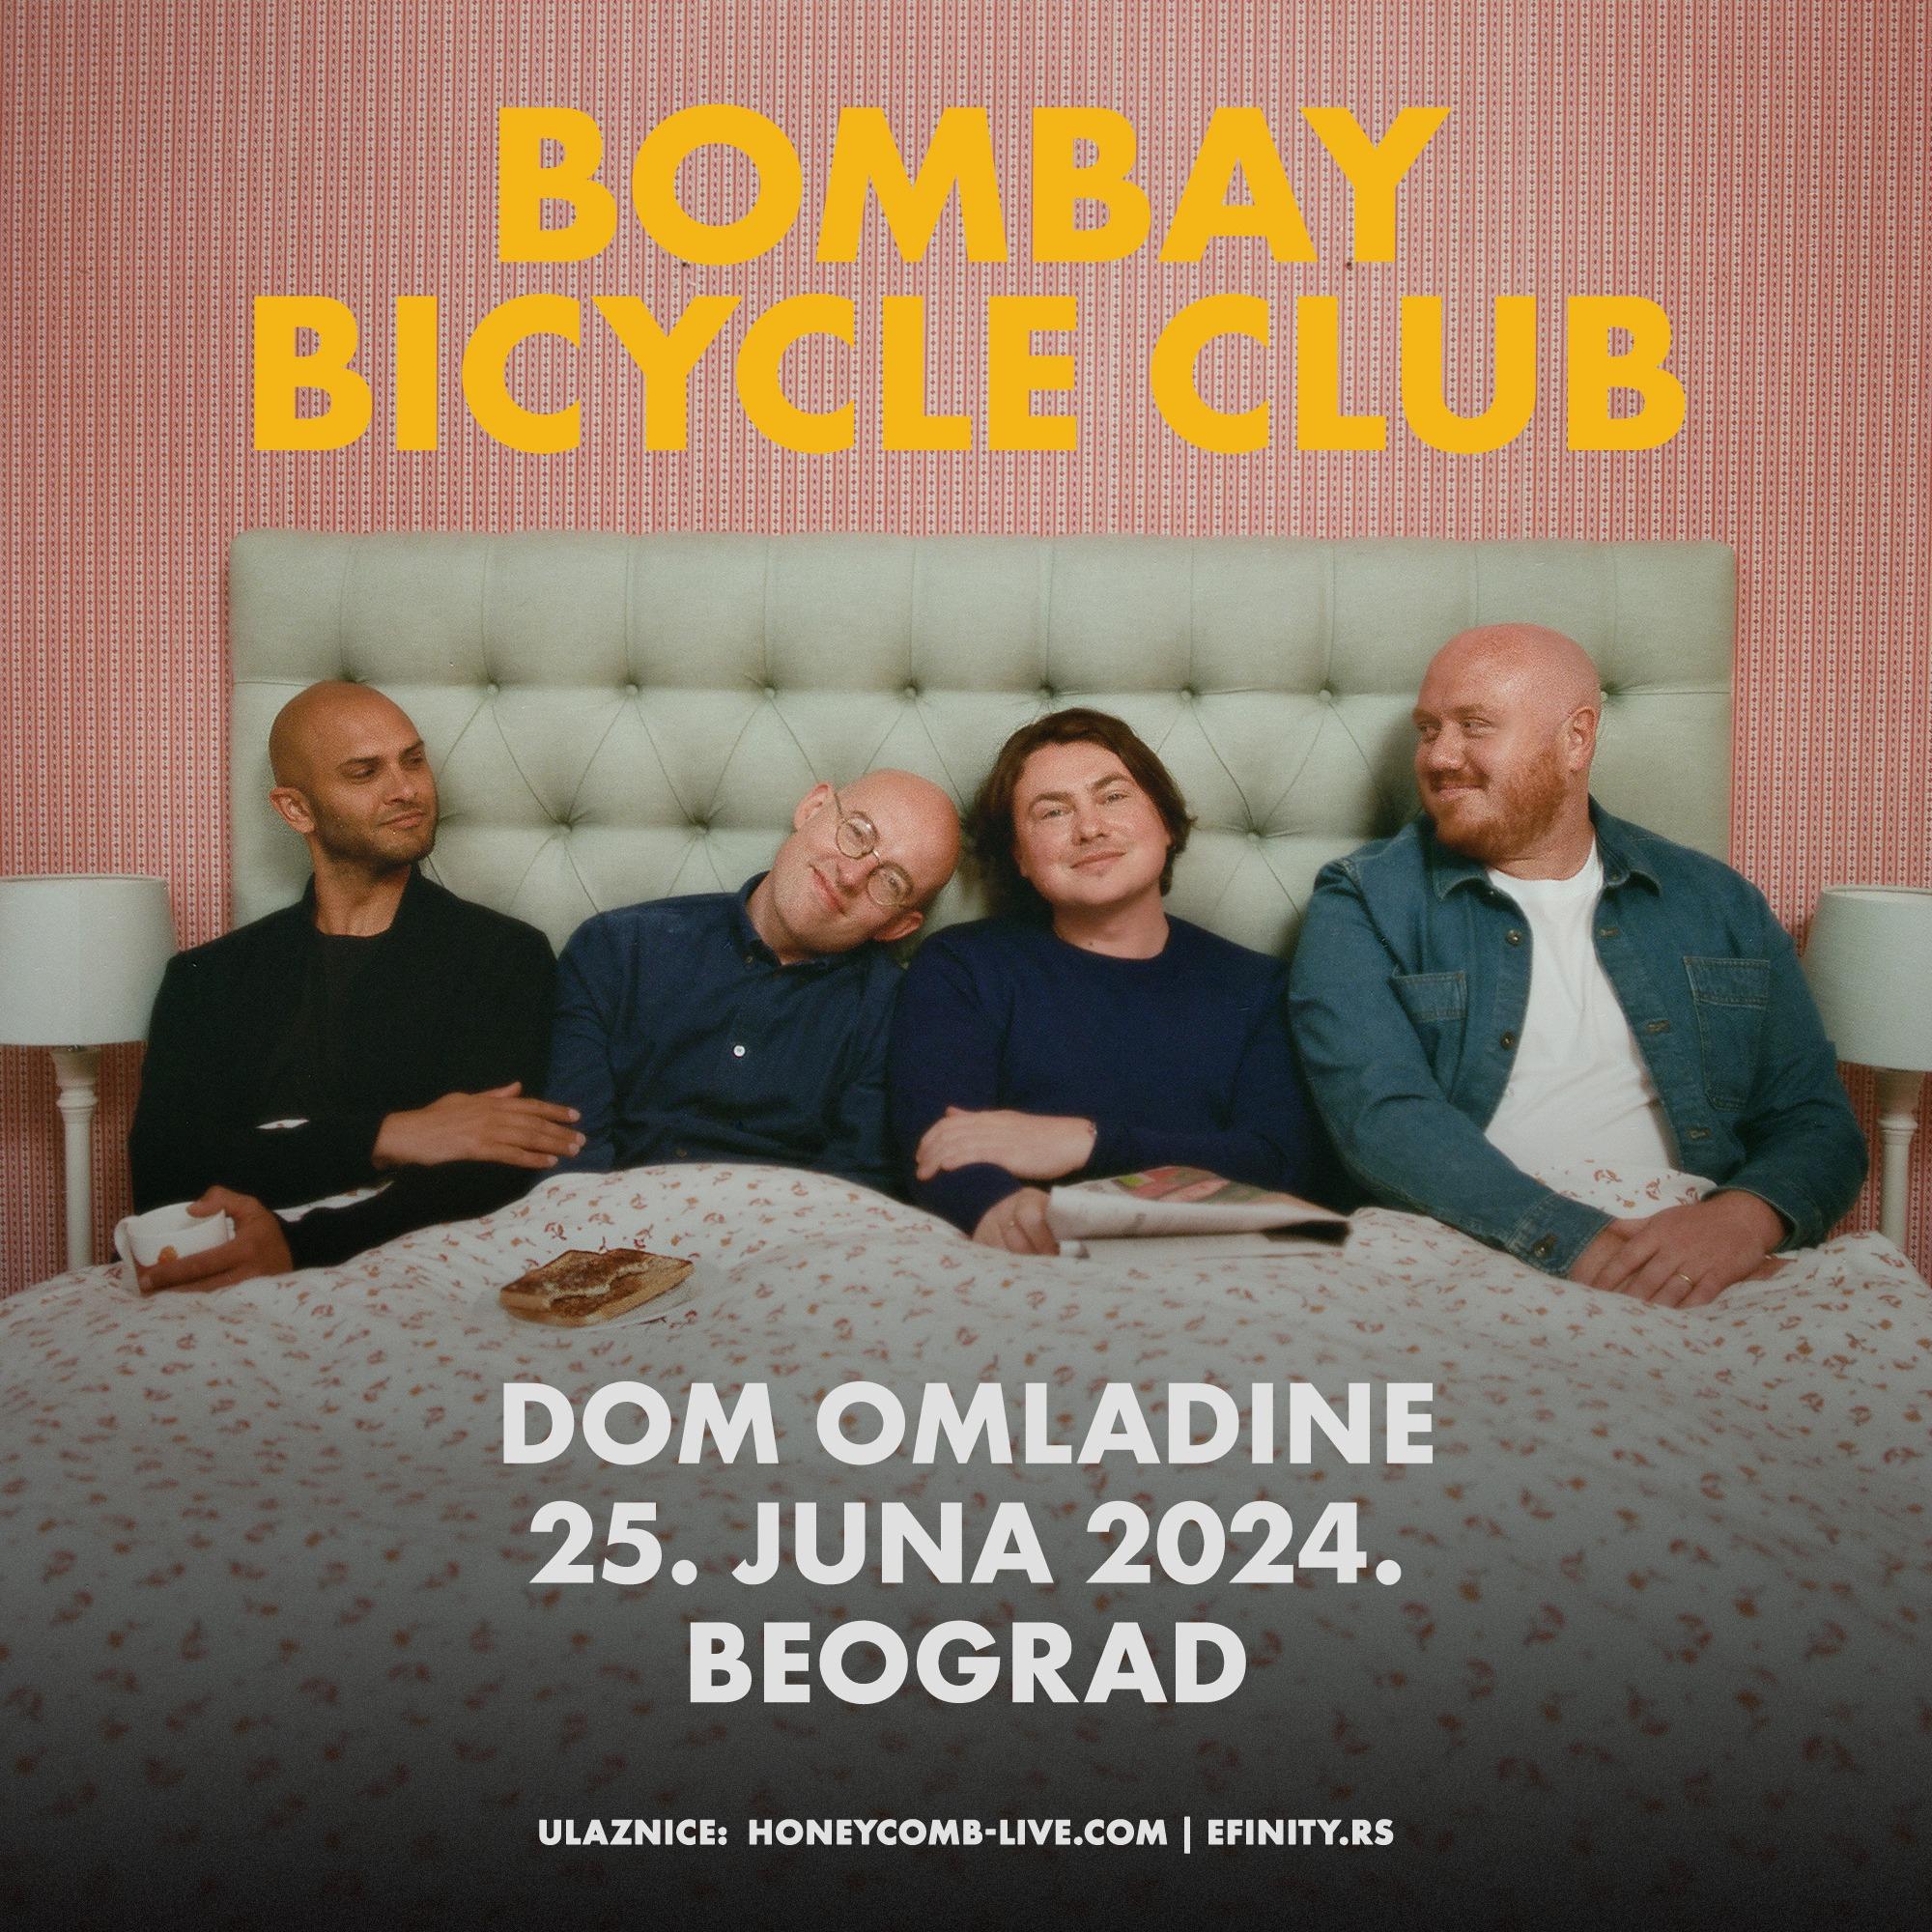 Bombay Bicycle Club (UK)